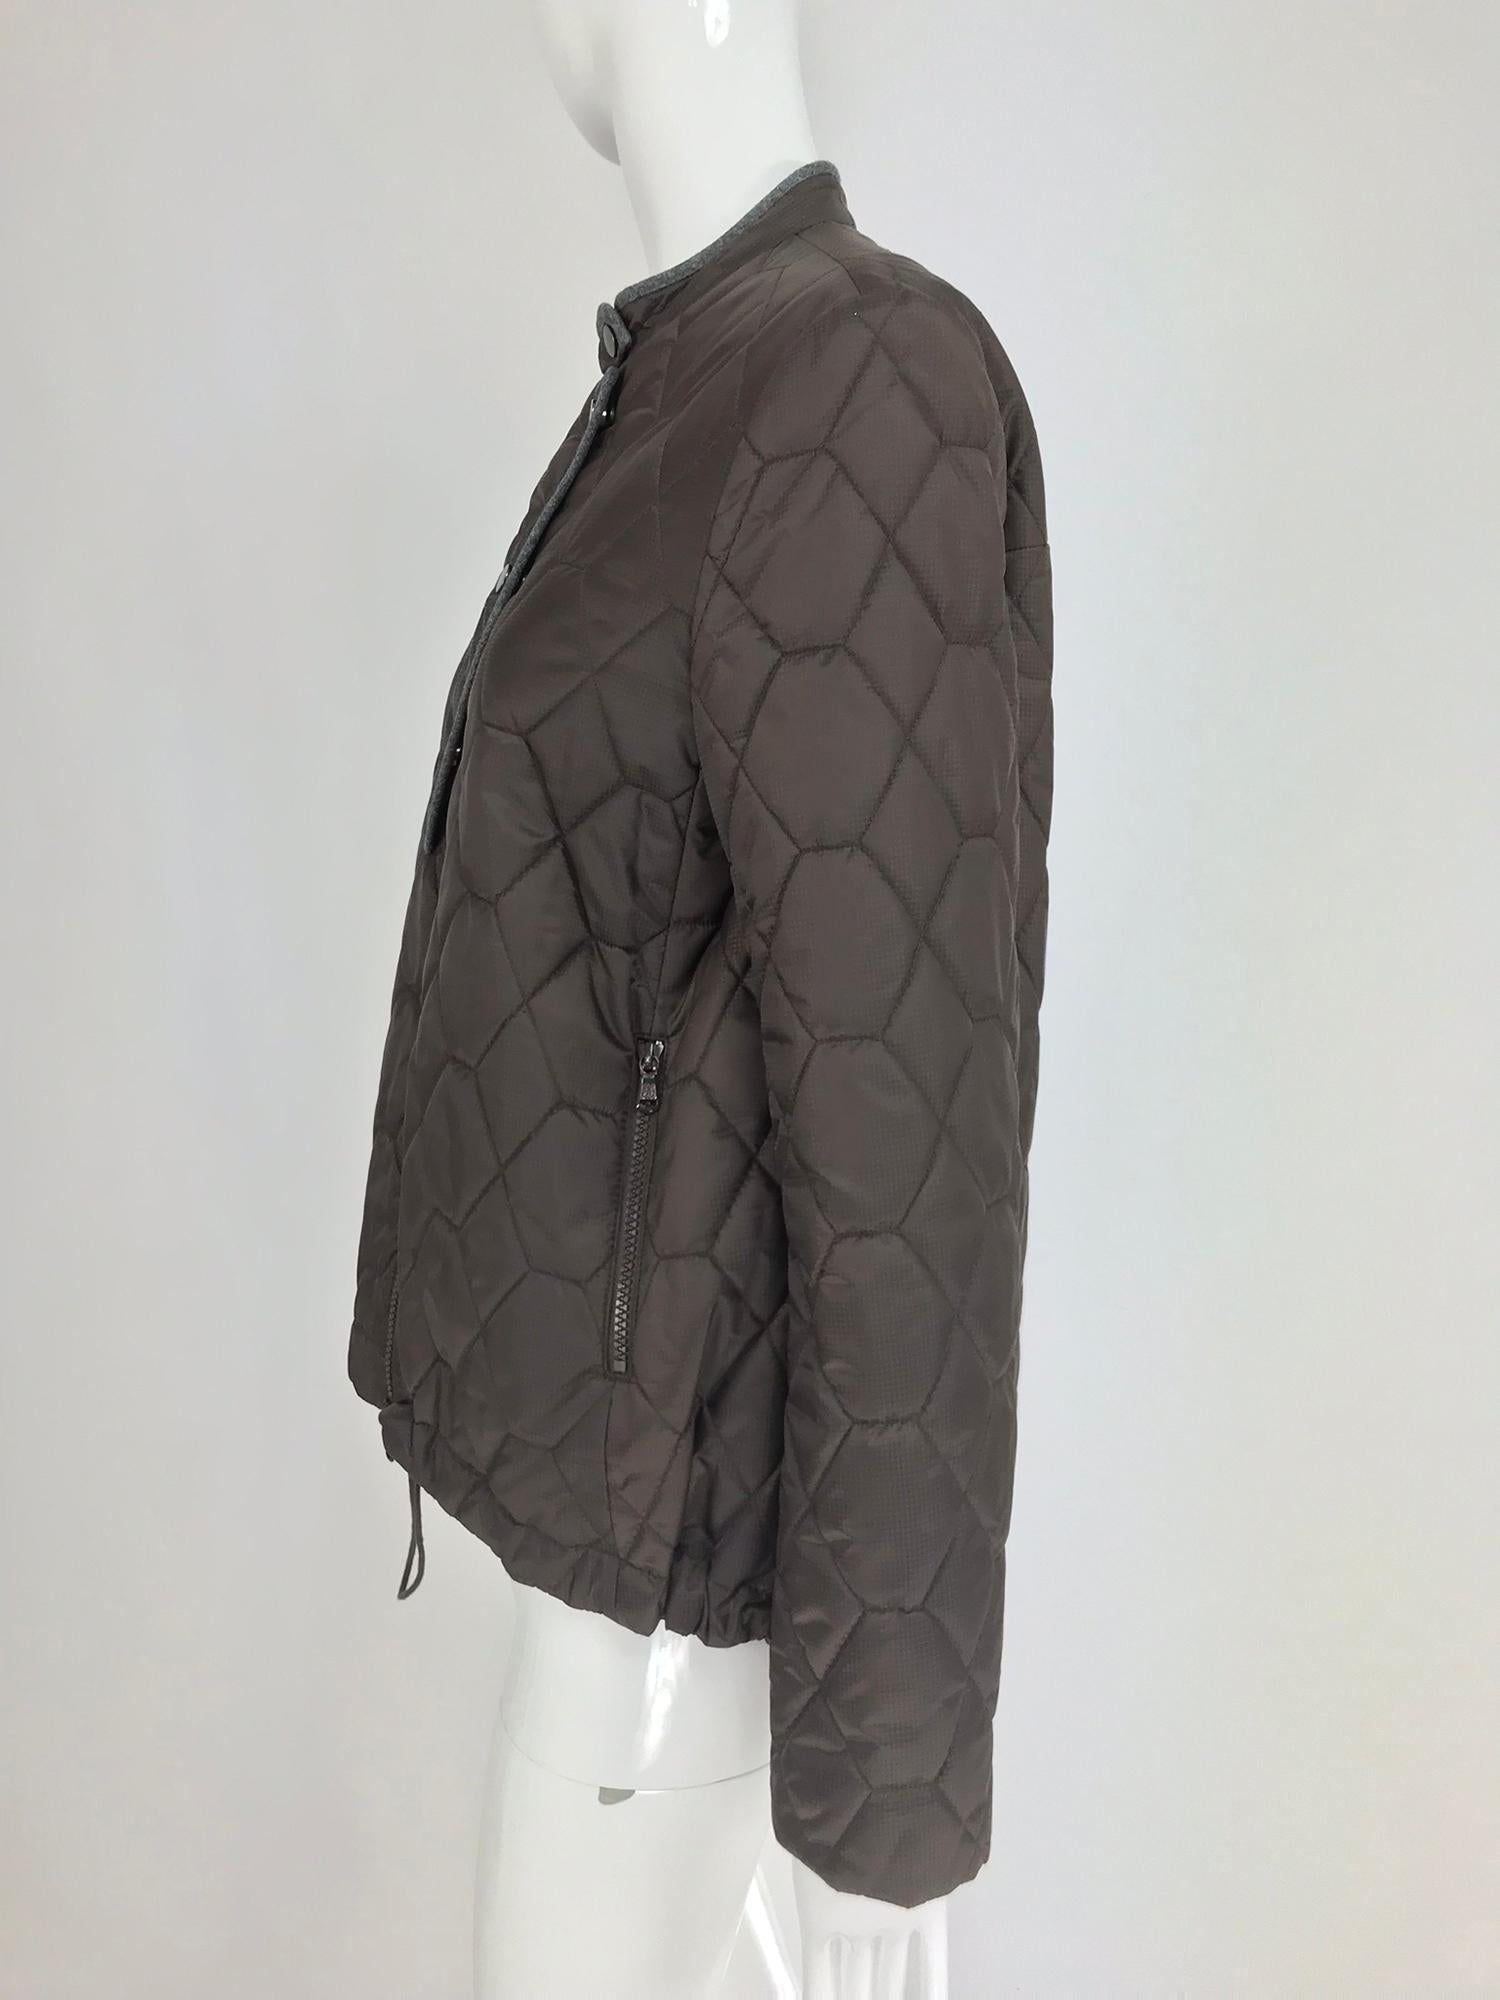 Black Brunello Cucinelli Chocolate Brown geometric pattern Quilted Sport Jacket 42